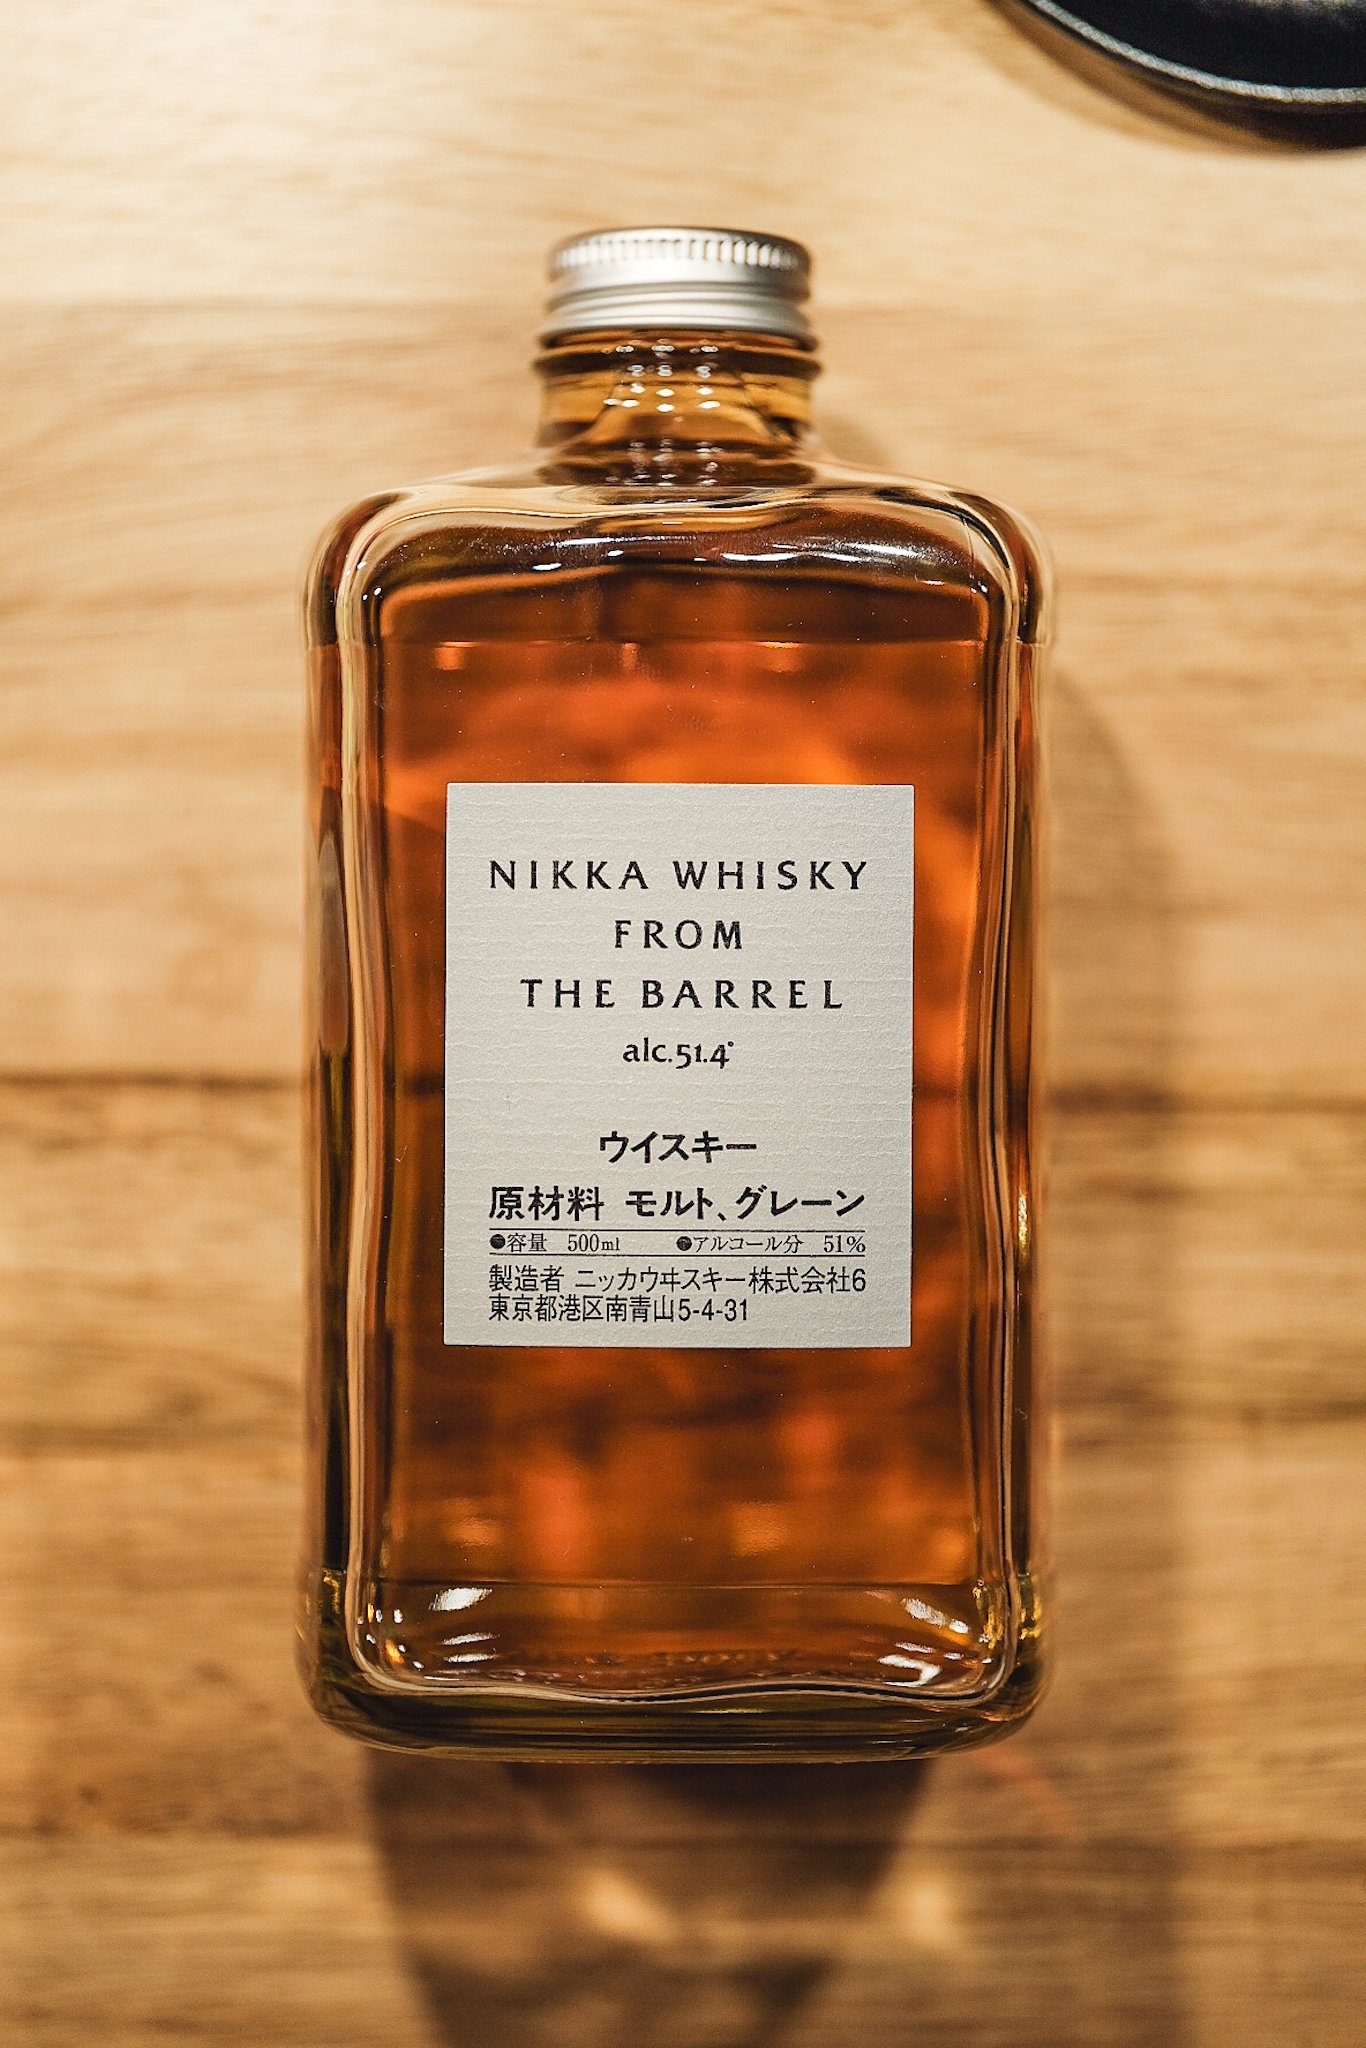 Nikka Whisky From The Barrel — Dramface